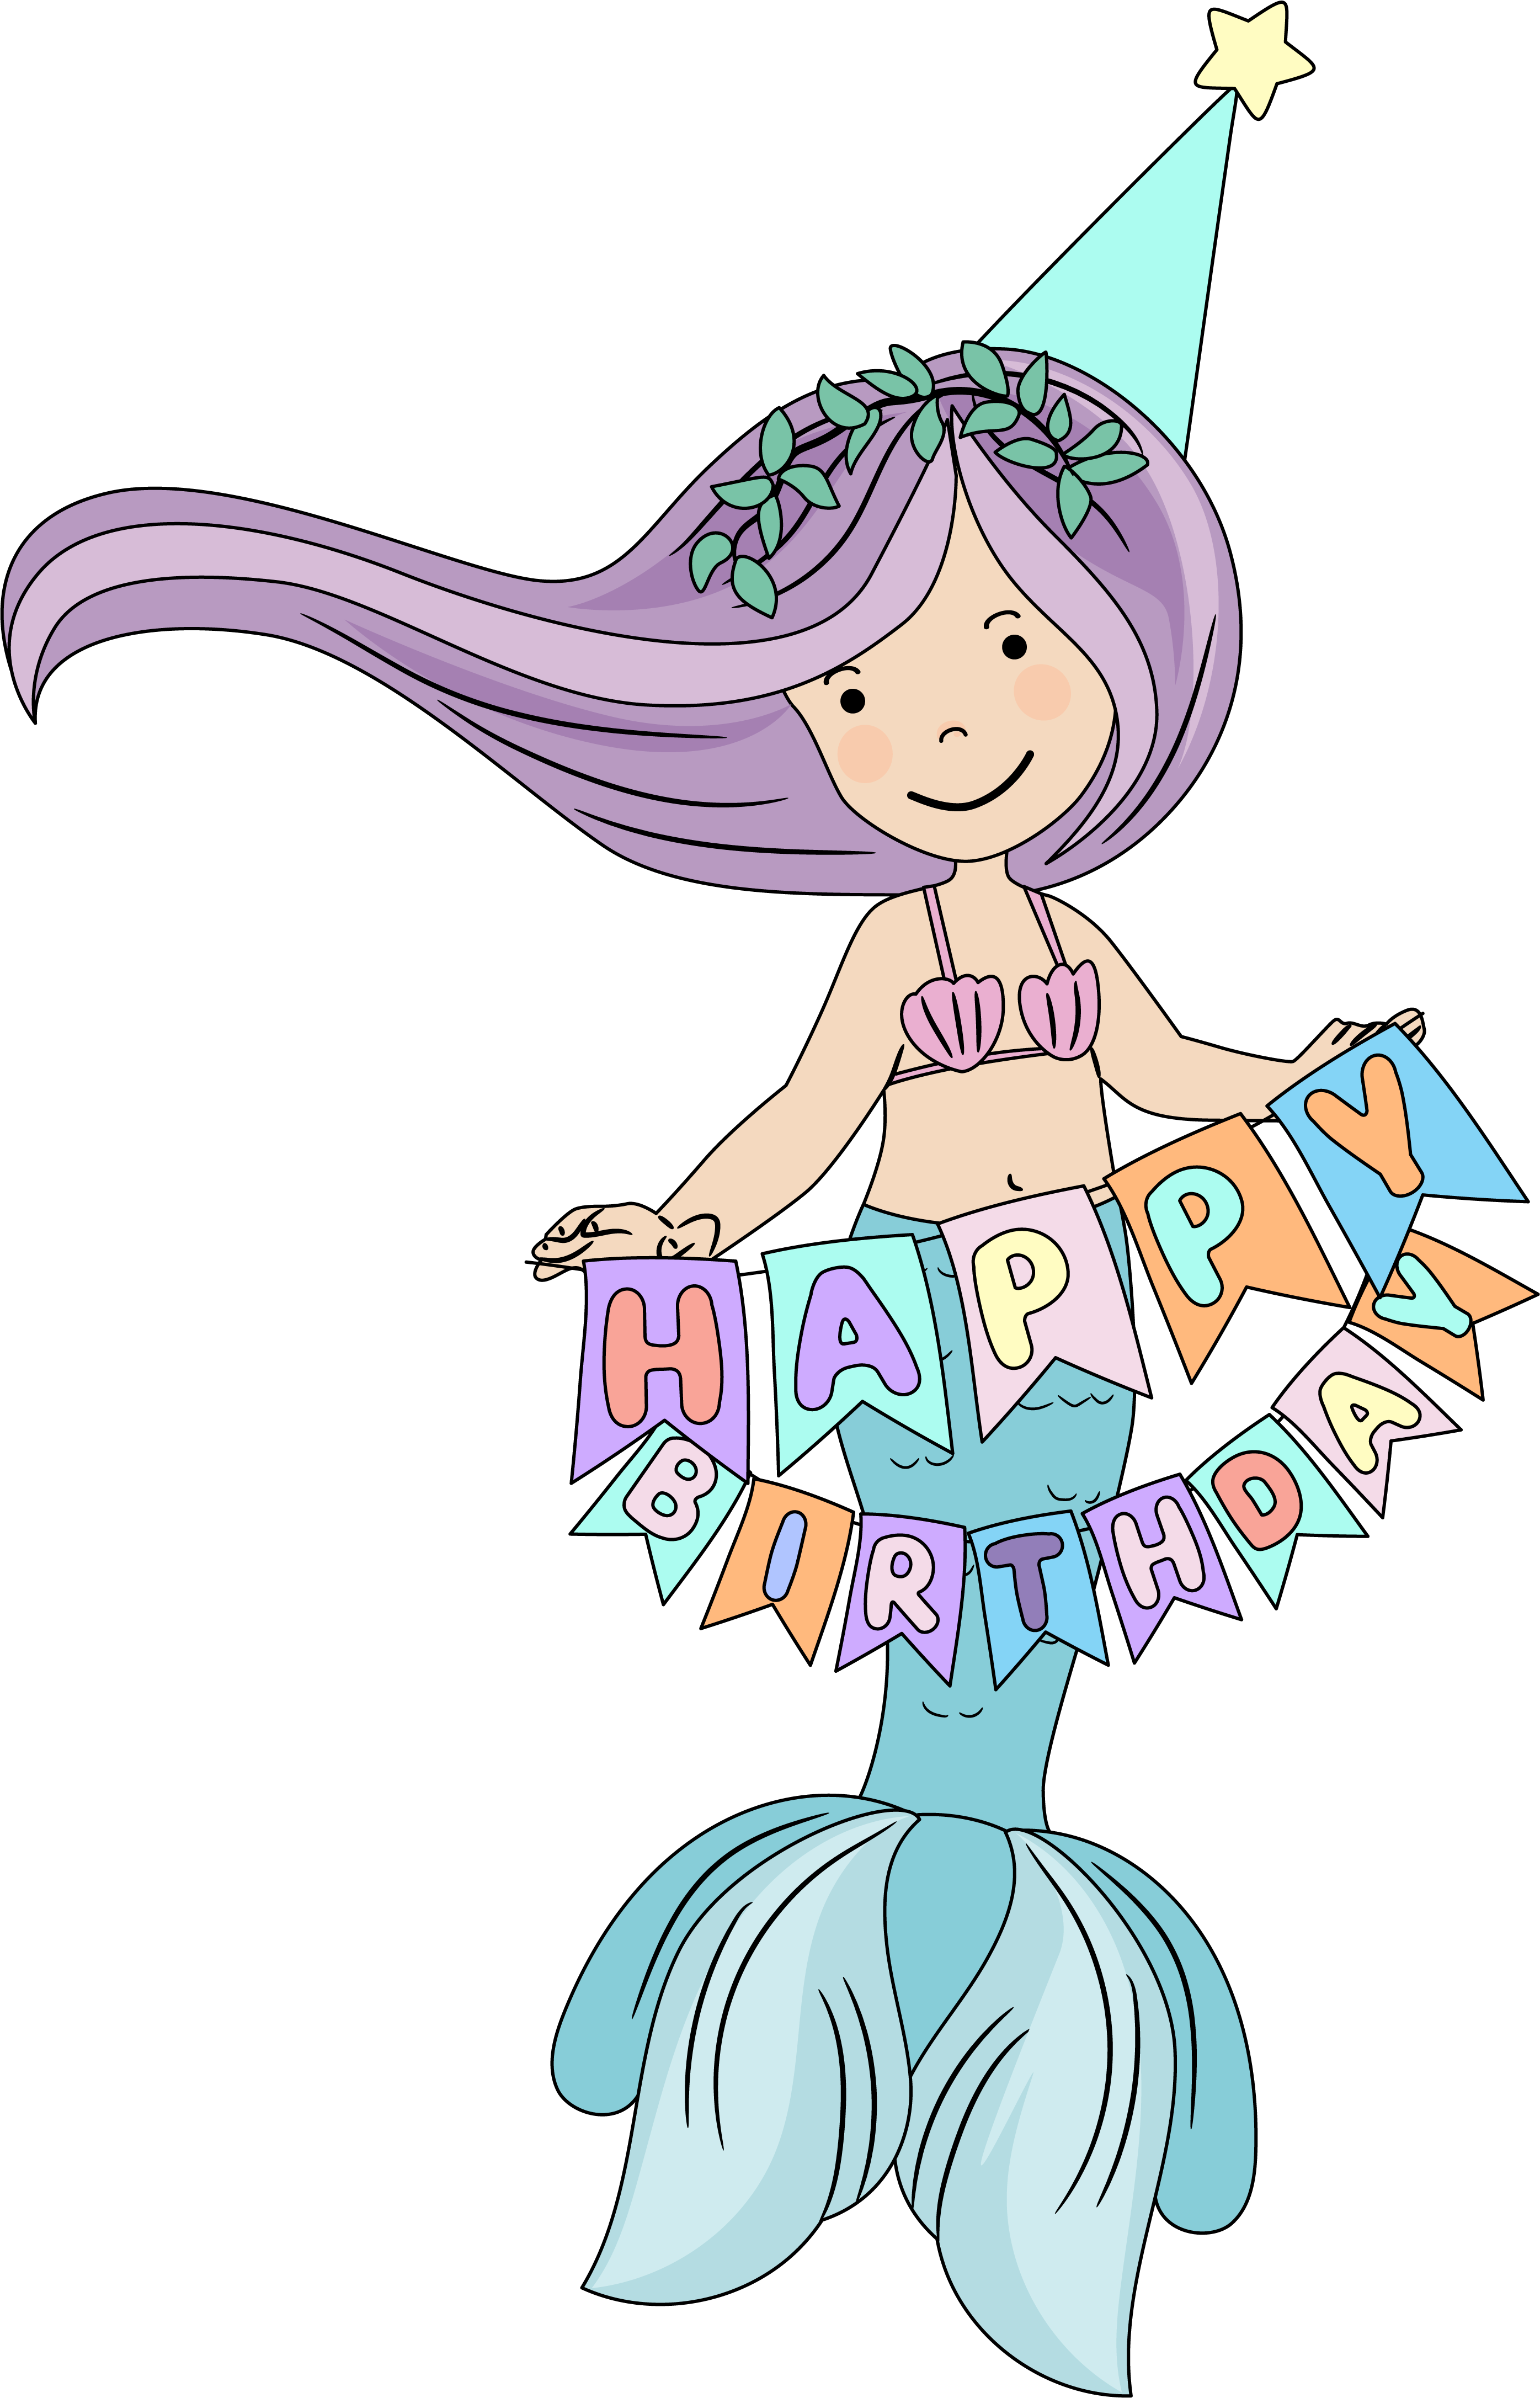 Mermaid with a happy birthday flyer.